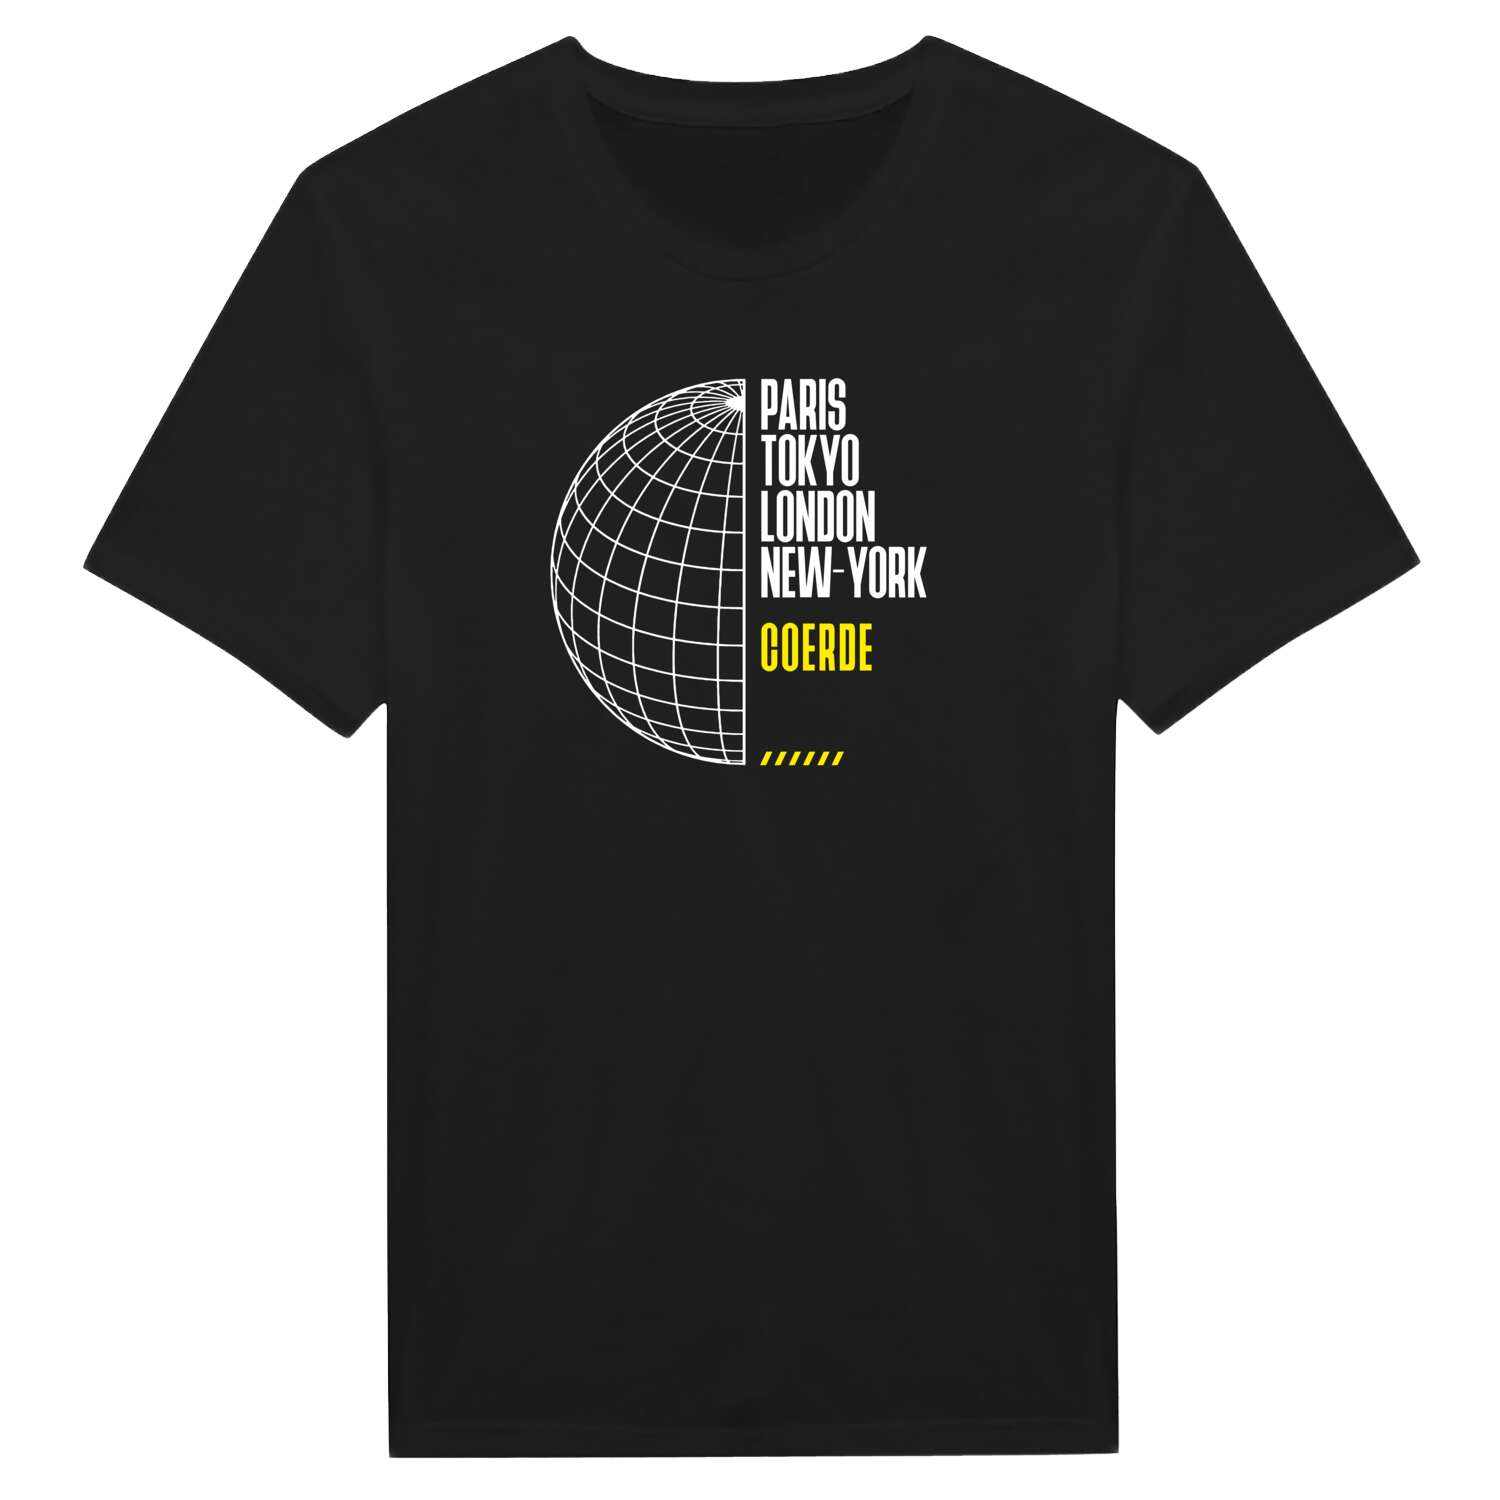 Coerde T-Shirt »Paris Tokyo London«